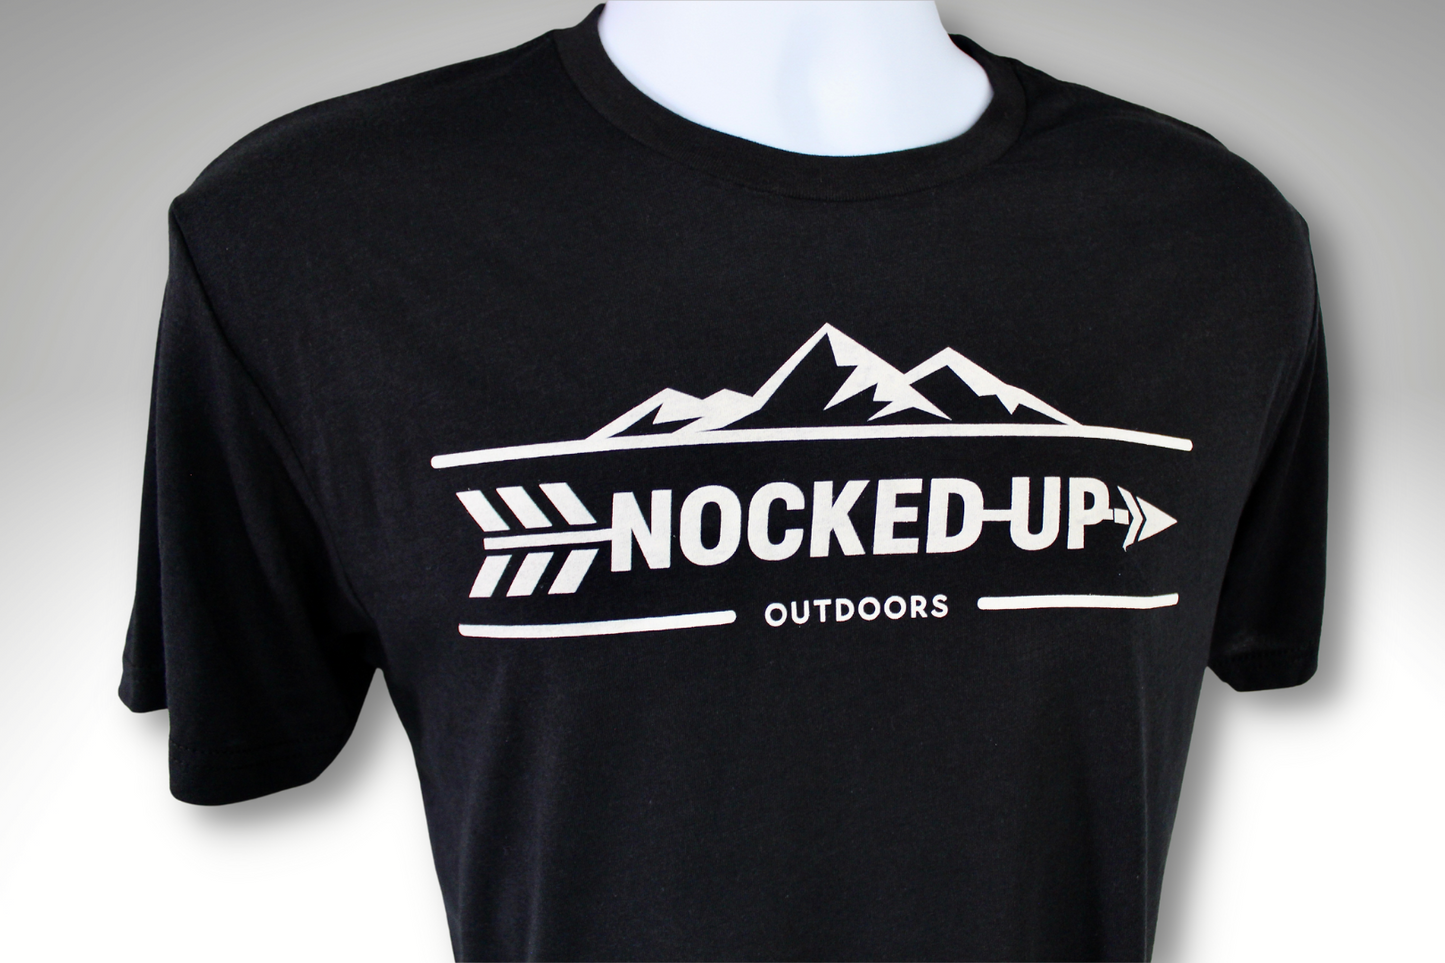 Nocked Up Outdoors T-Shirt